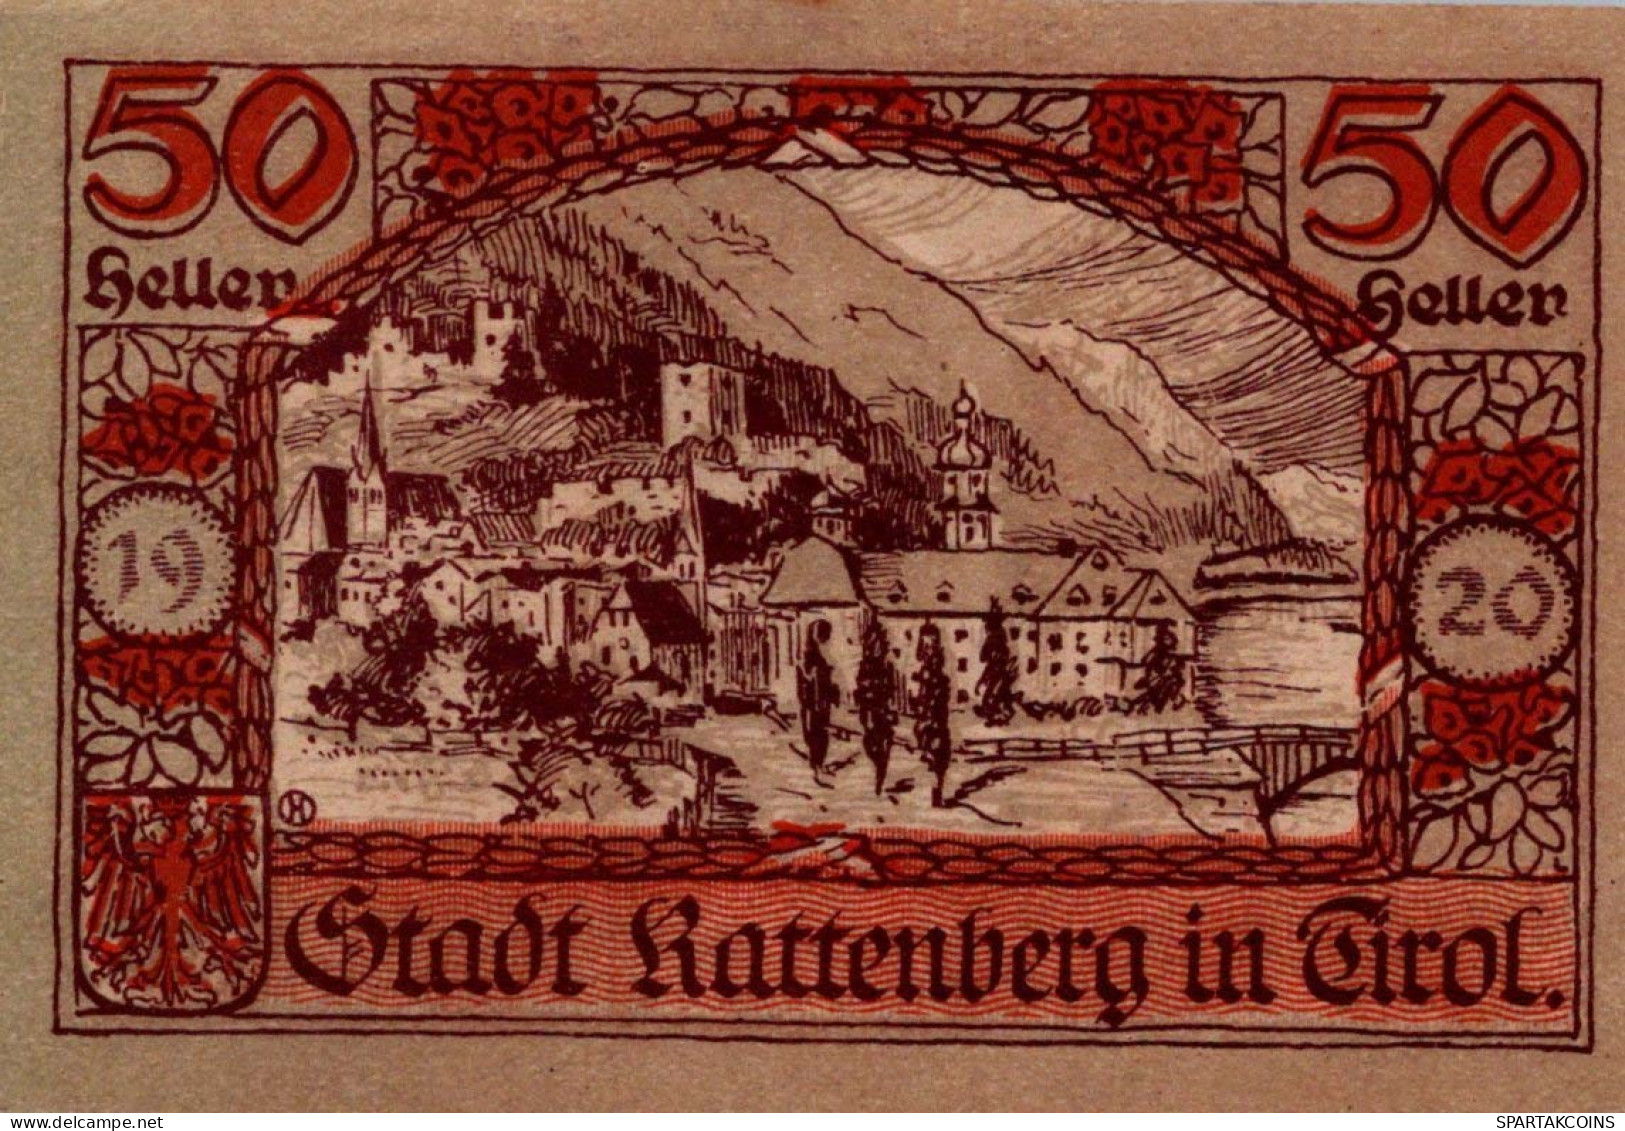 50 HELLER 1920 Stadt RATTENBERG Tyrol Österreich Notgeld Banknote #PE522 - [11] Local Banknote Issues